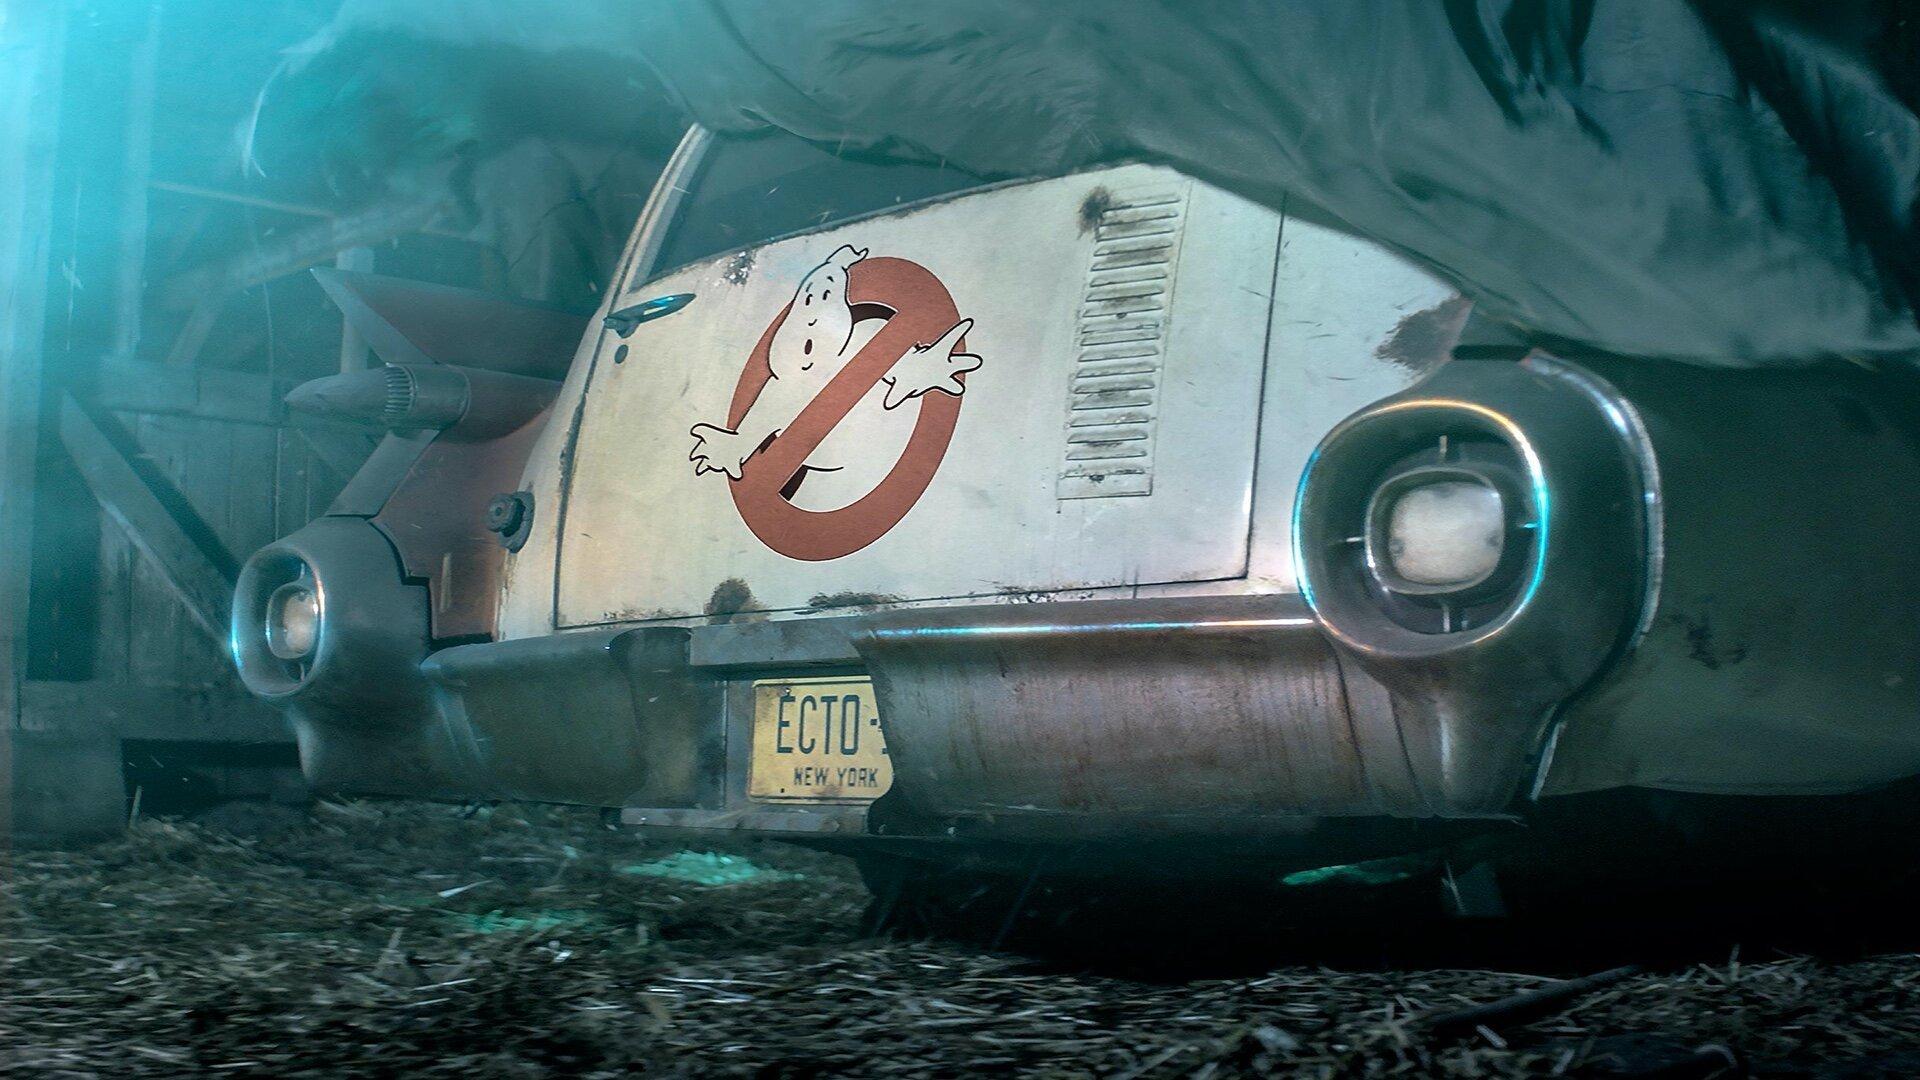 Ghostbusters: Afterlife trailer lands